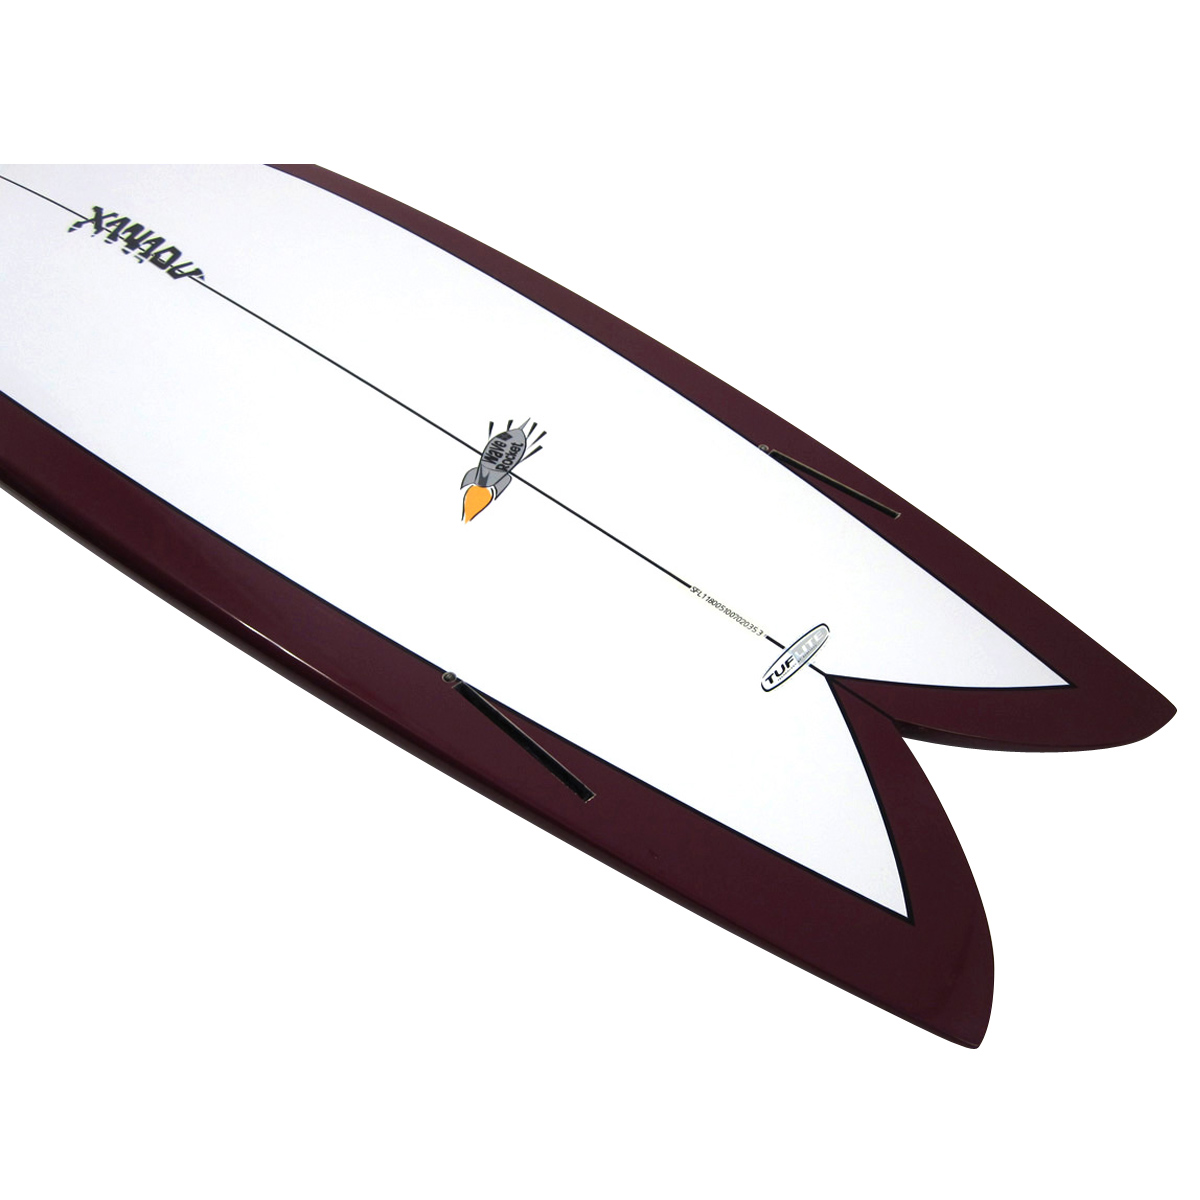 Xanadu Surf Design / 5`10 Rocket Fish Surftech